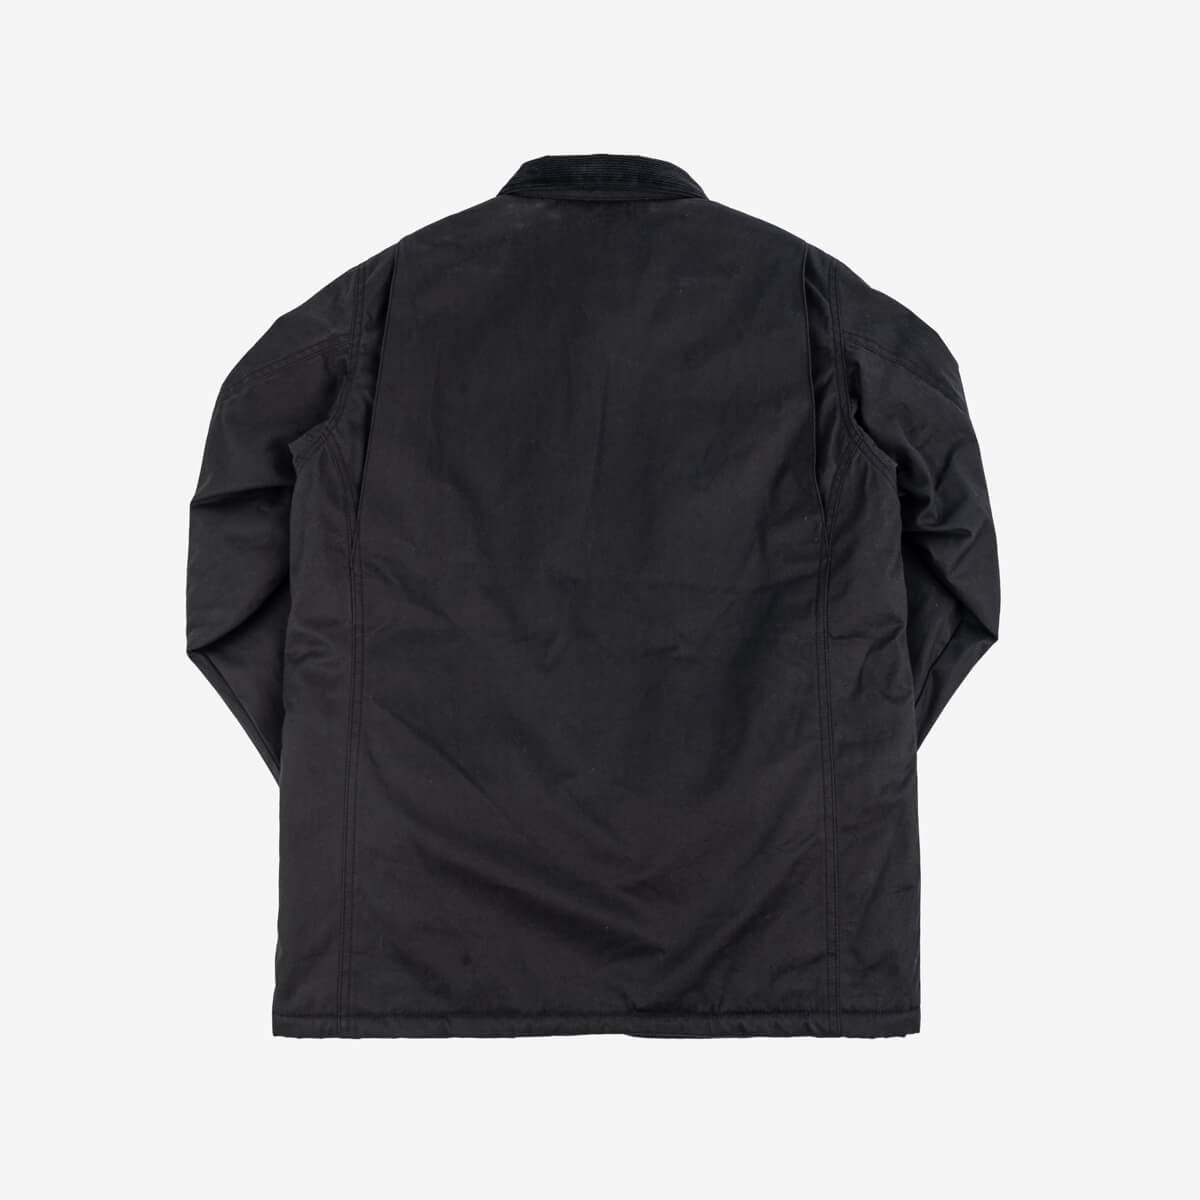 Iron Heart-Jacket-7oz Oiled Cotton Chore Jacket-Black - Black Riot HK